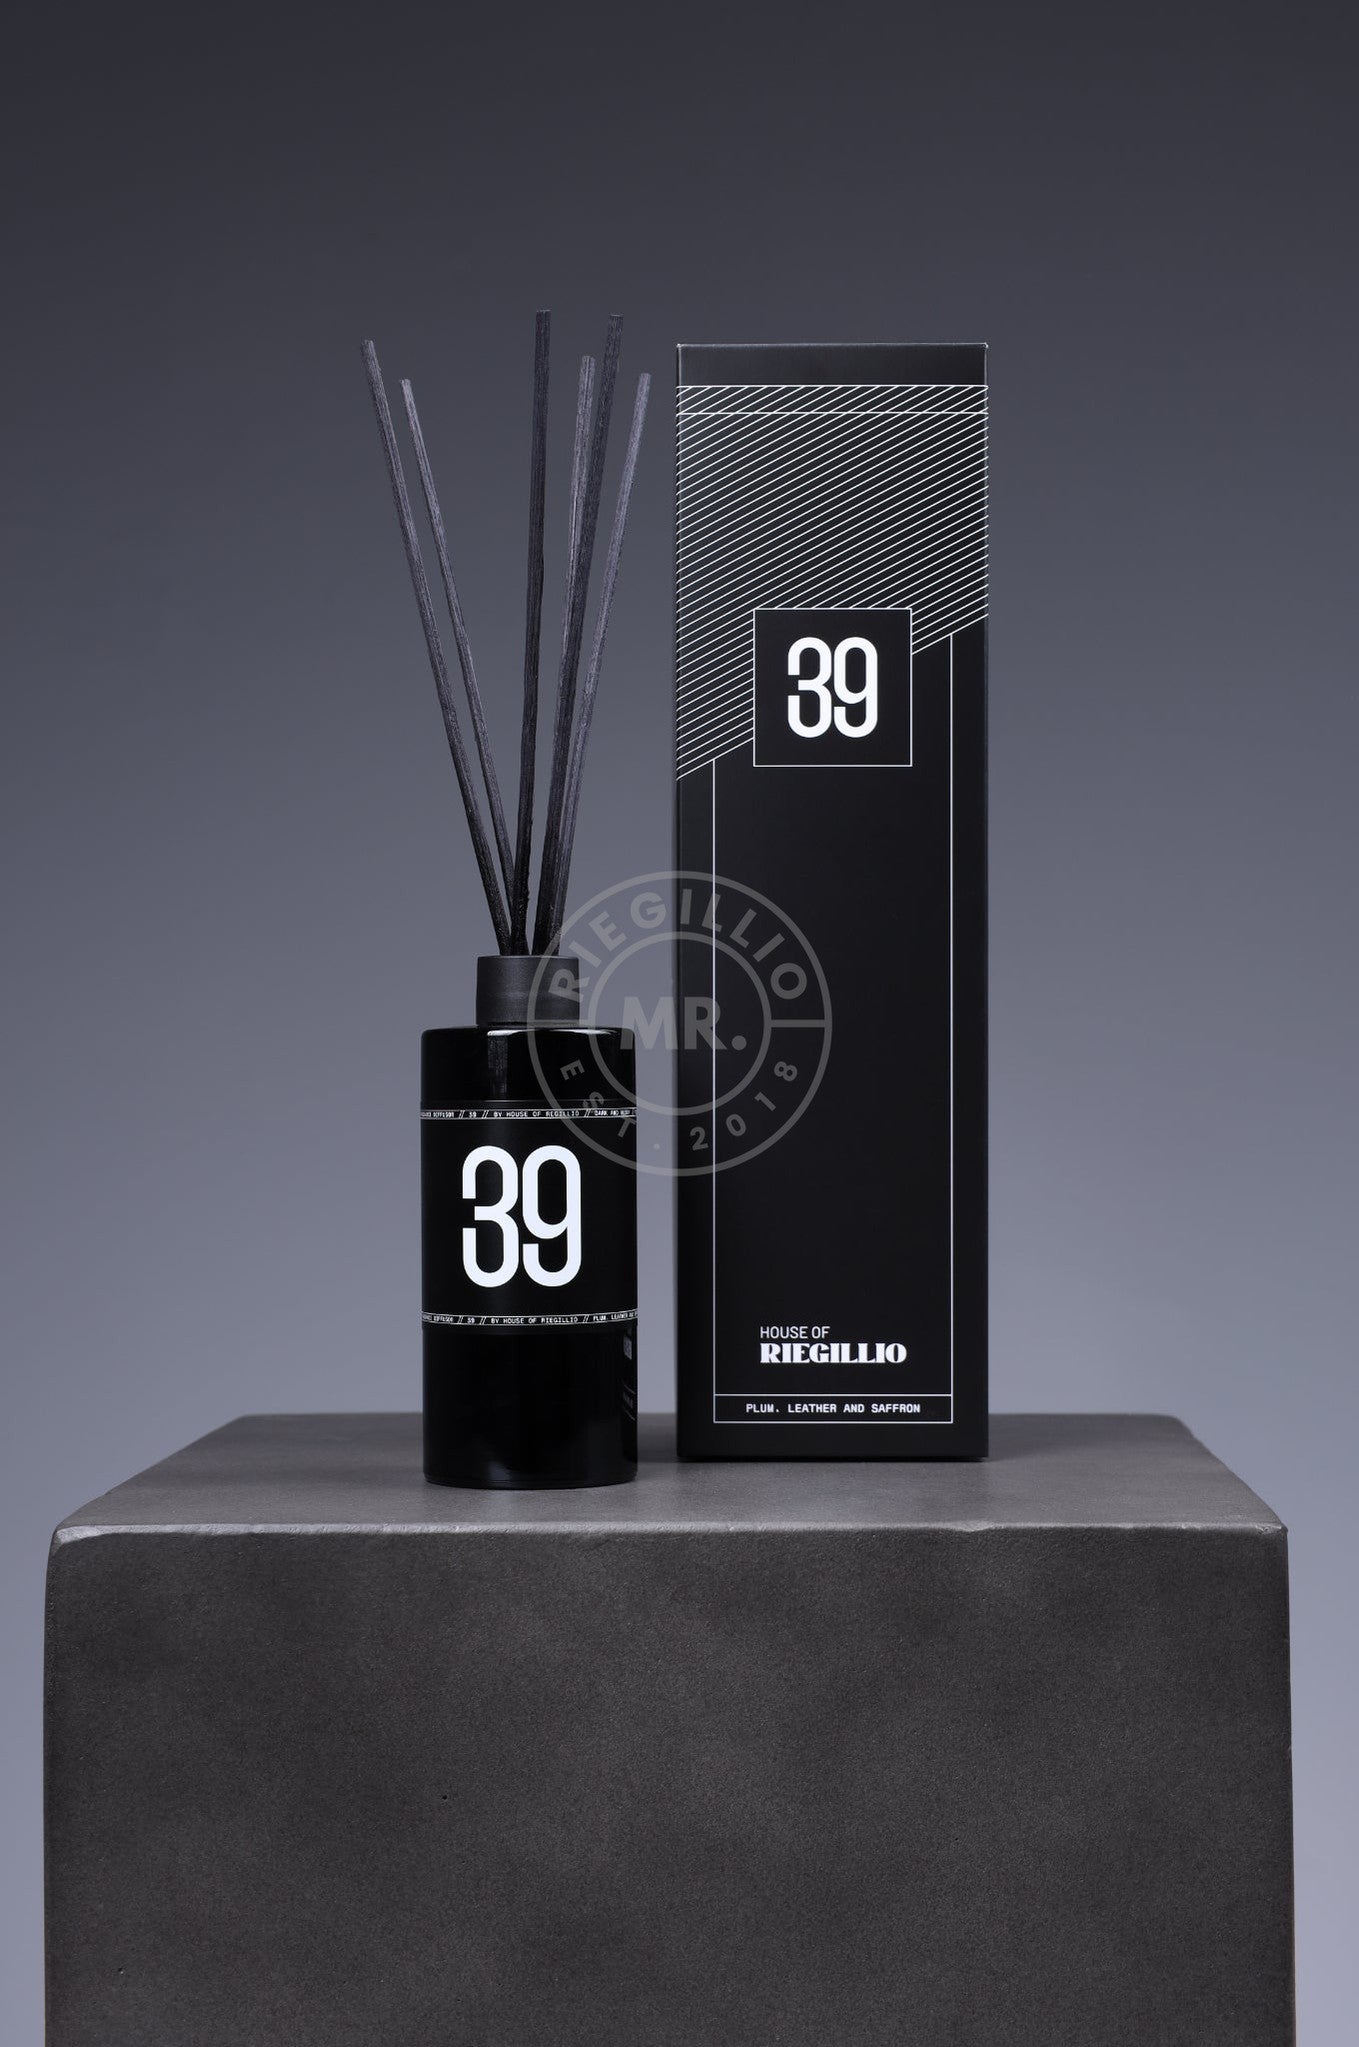 House of Riegillio: Fragrance Sticks #39-at MR. Riegillio